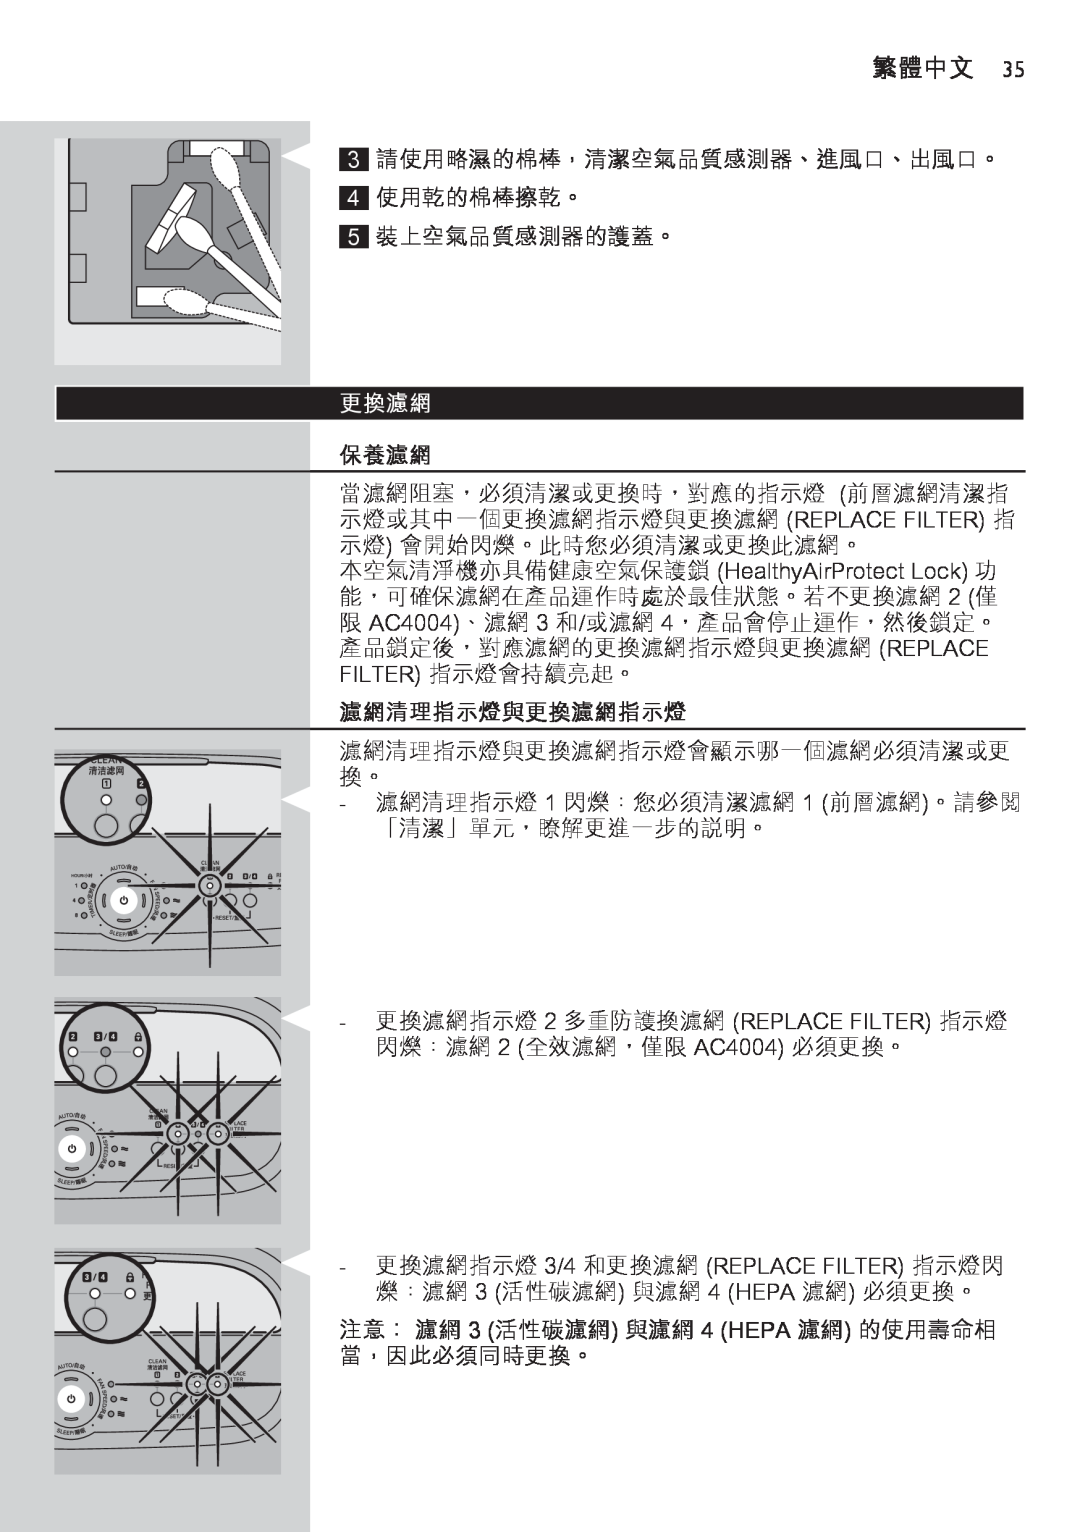 Philips AC4002 manual 保養濾網, 濾網清理指示燈與更換濾網指示燈, 繁體中文 